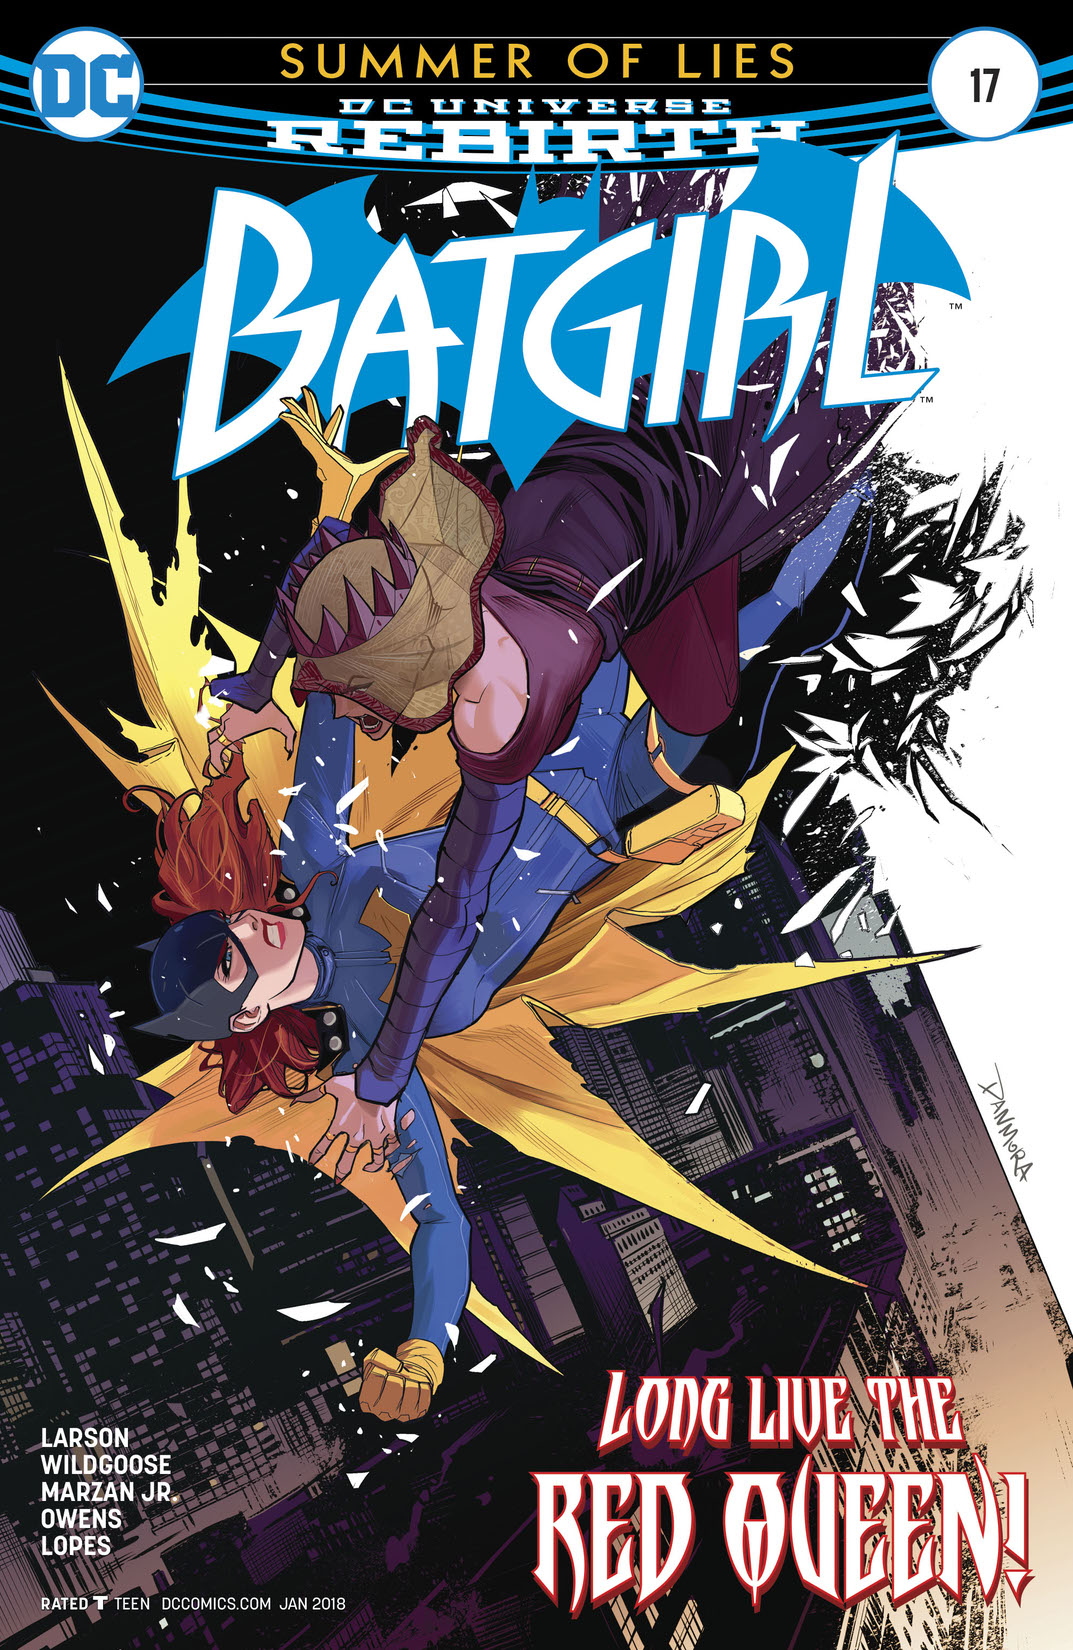 Batgirl (2016-) #17 preview images